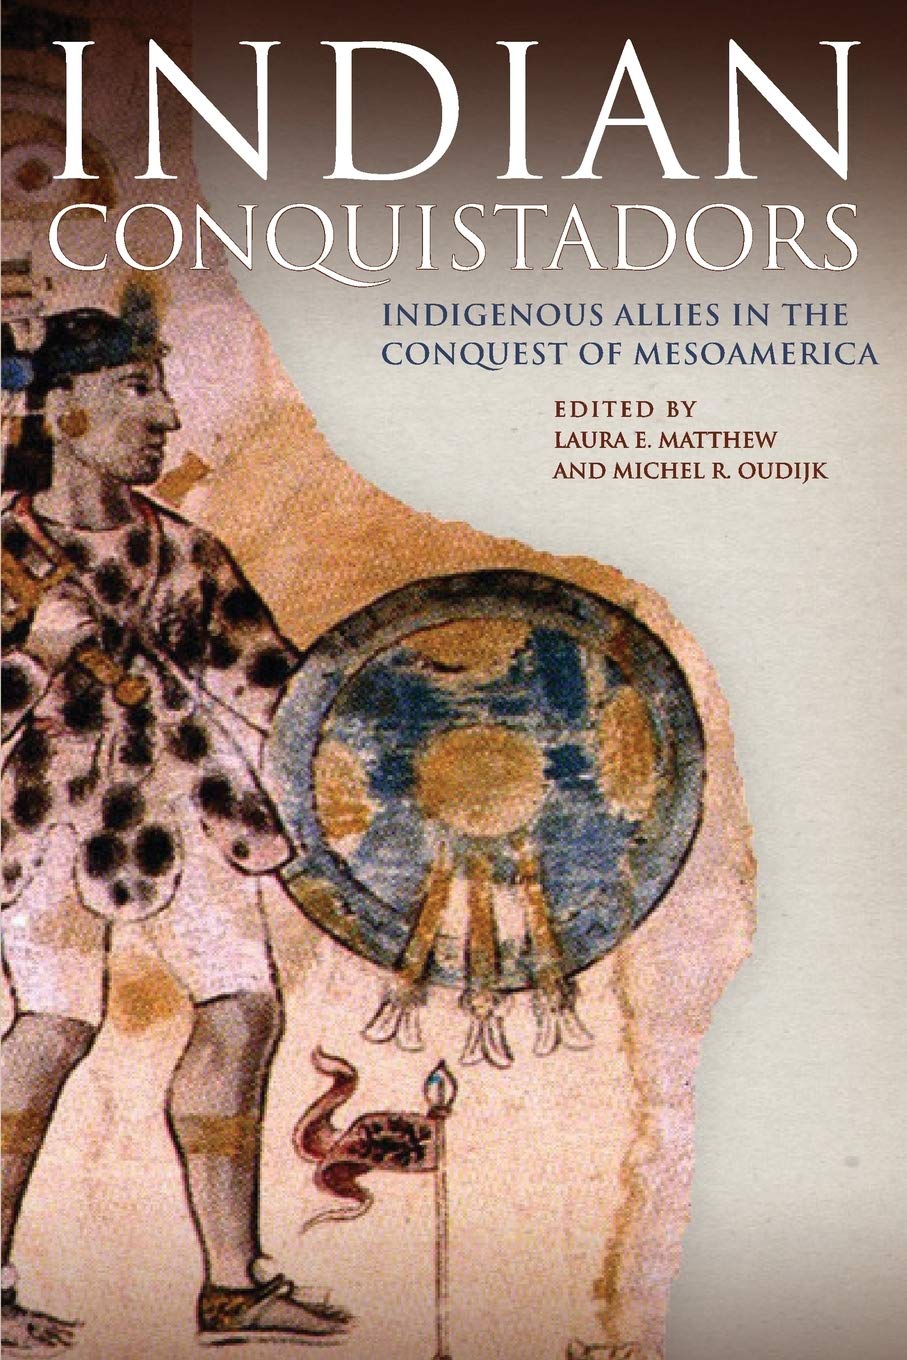 Indian Conquistadors. Indigenous Allies in the Conquest of Mesoamerica. Editado por Laura E. Matthew y Michel R. Oudijk. 2007.